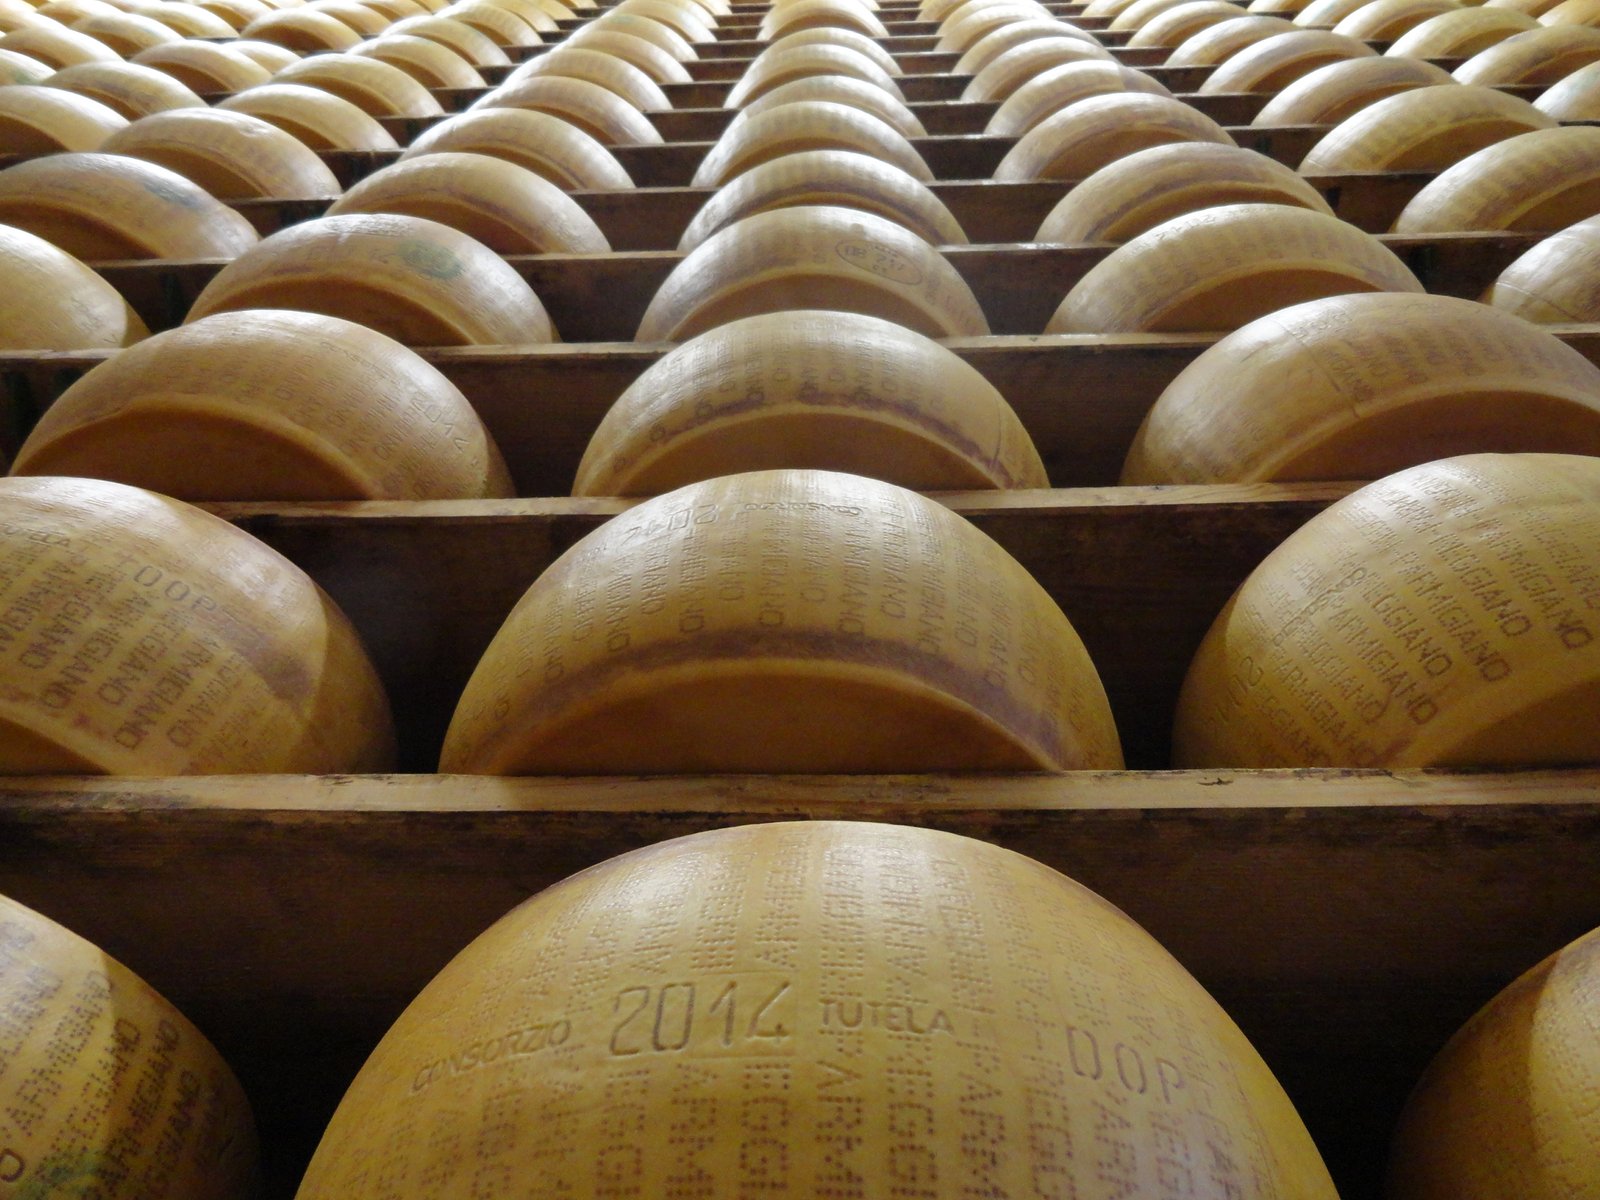 Parmesean Cheese, Parma, Italy